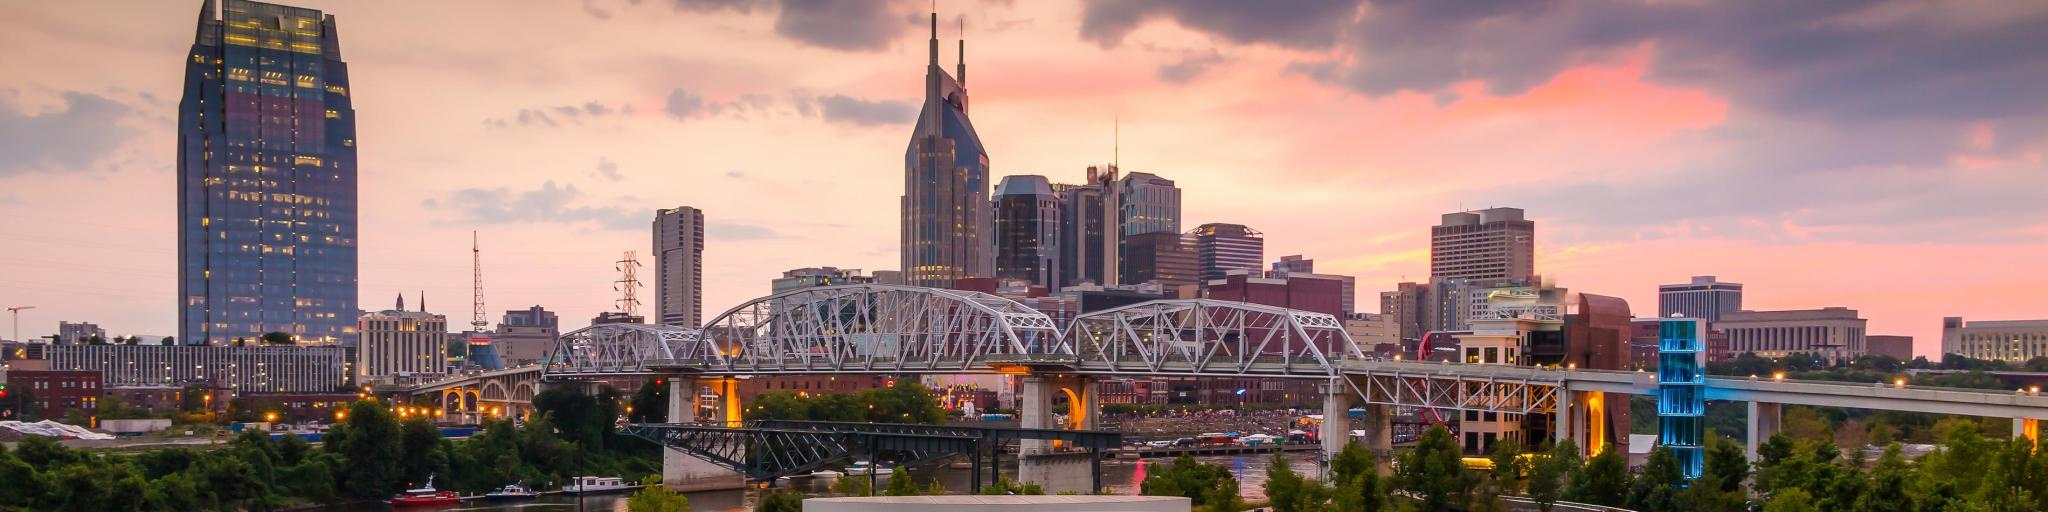 Nashville, Tennessee, USA taken at downtown skyline at twilight.